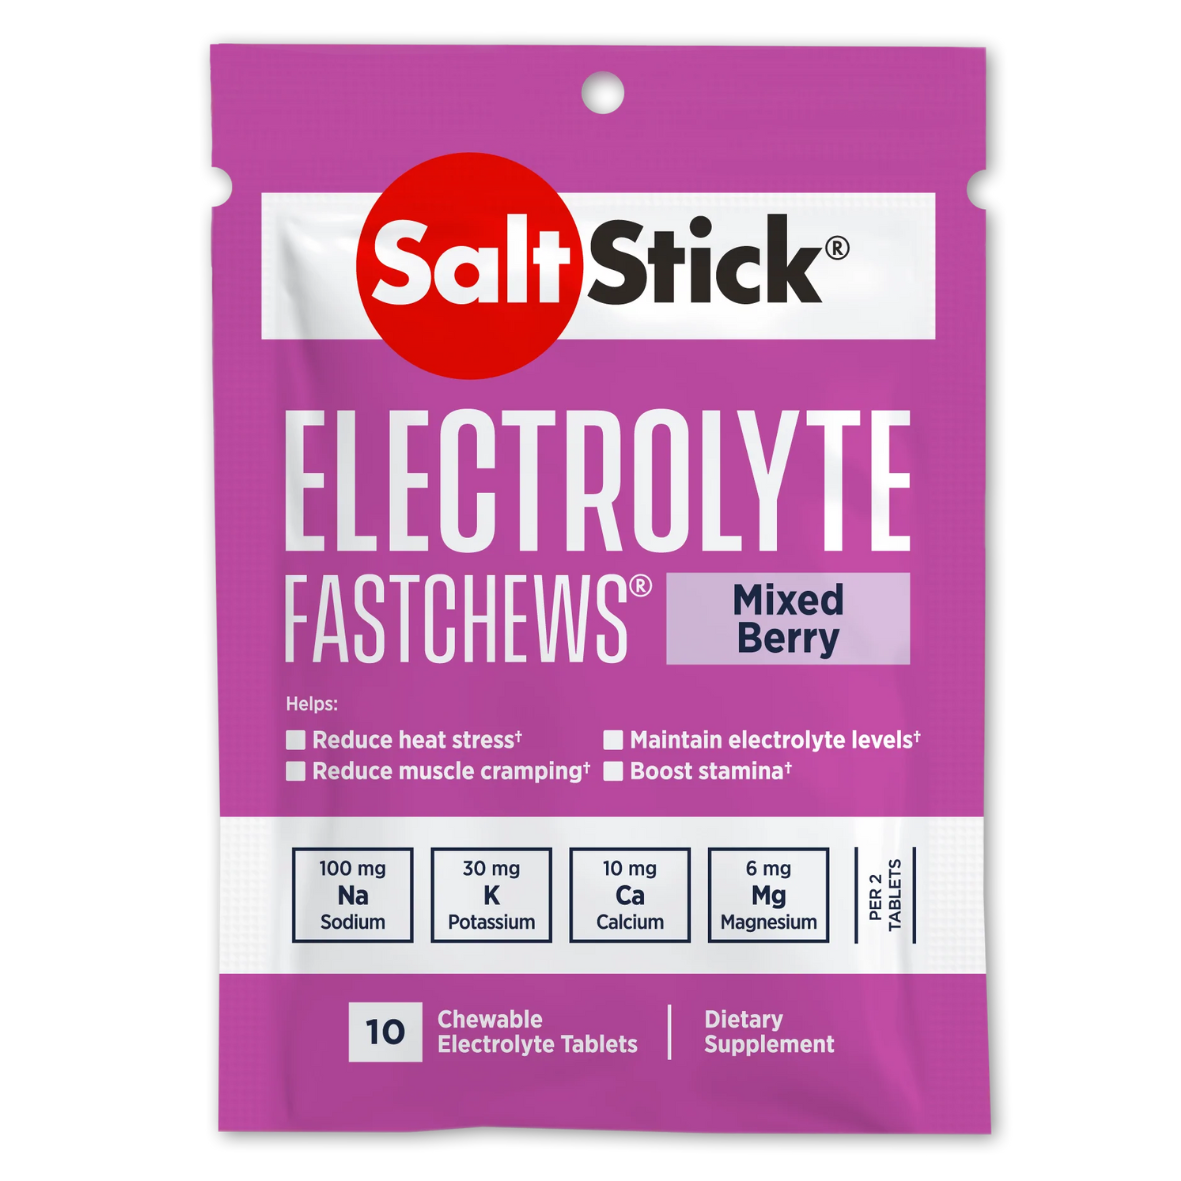 SaltStick Mixed Berry Electrolyte FastChews tablets